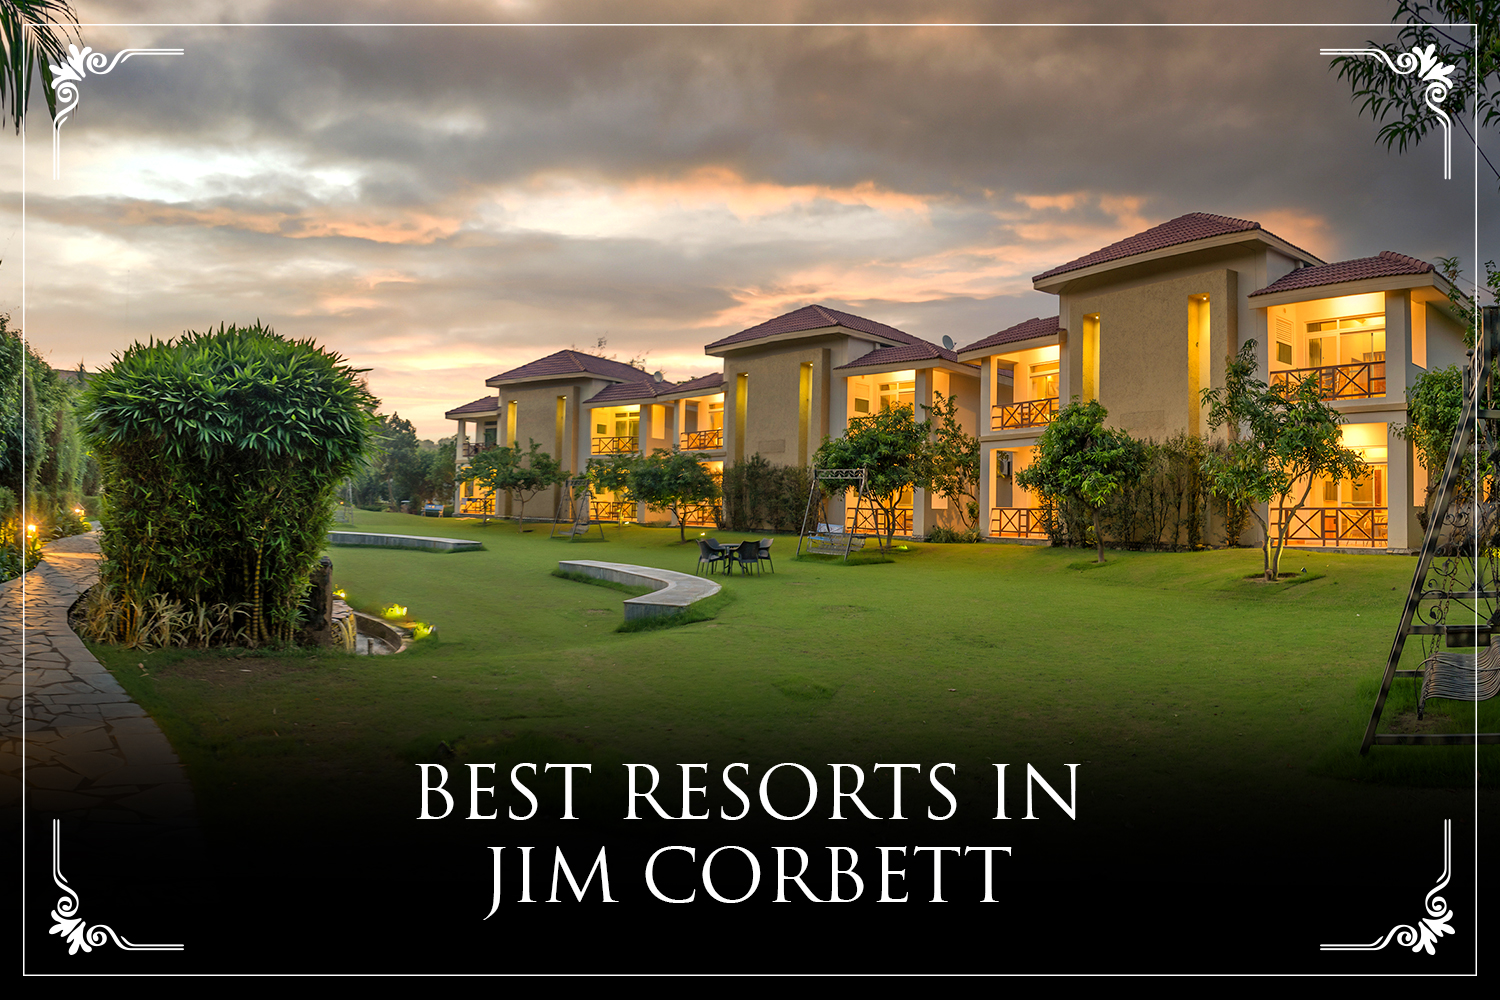 Looking for one of the best resorts in Jim Corbett? Make priceless memories with Resort De CoraçÃo